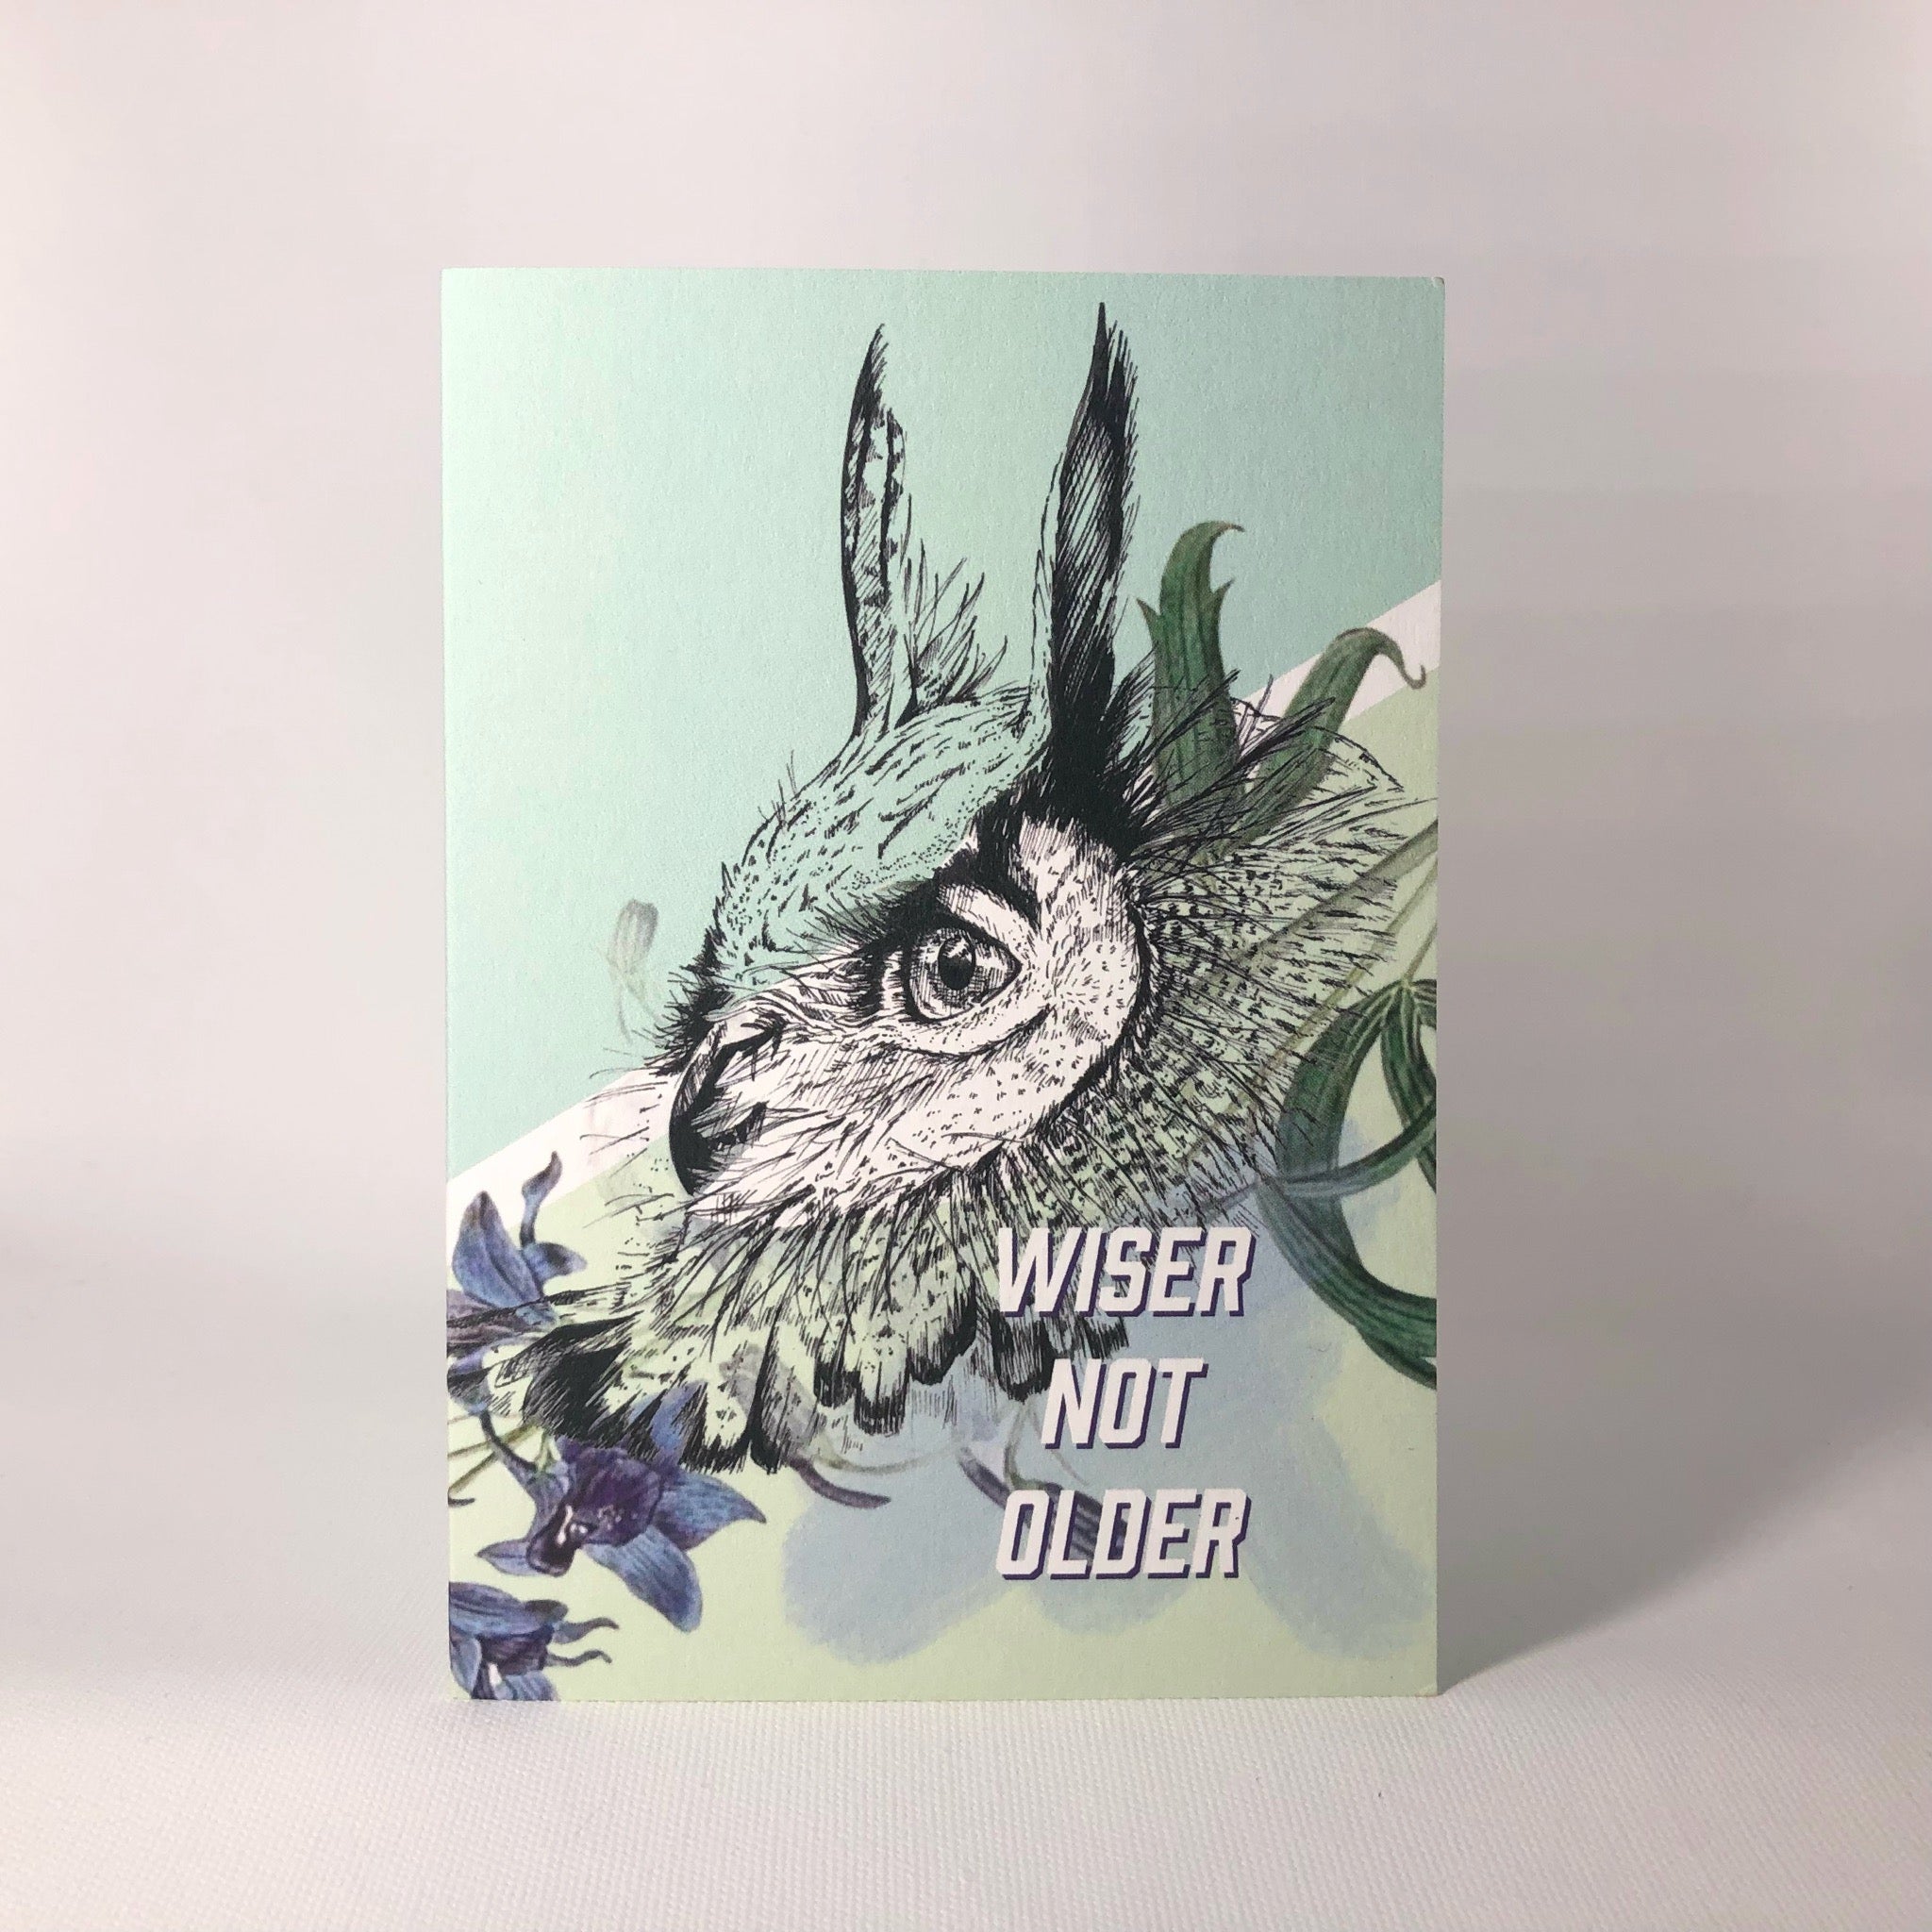 Wiser Eagle Owl Greeting Card